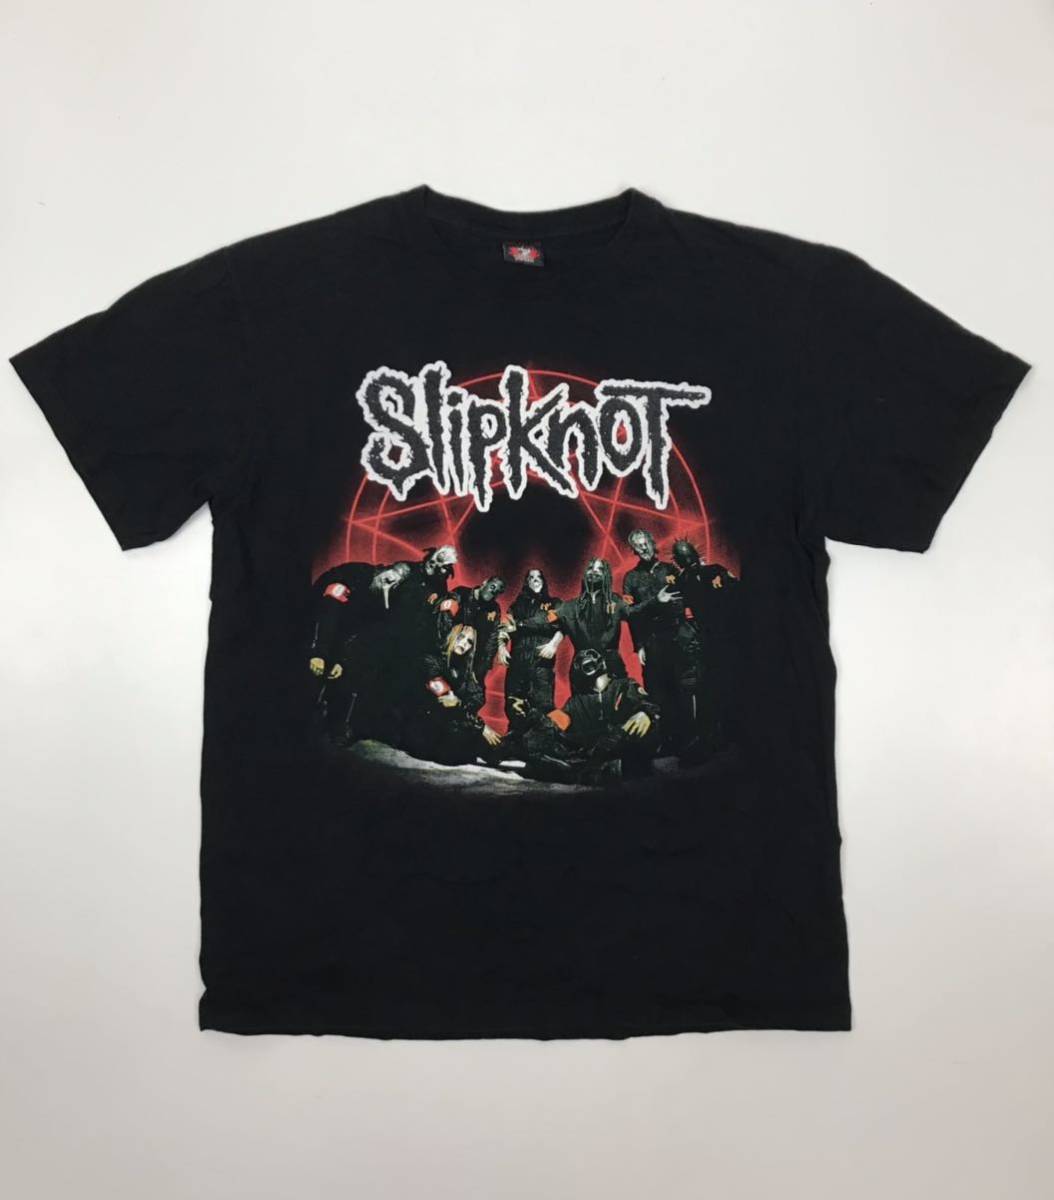 Tシャツ バンドTシャツ SlipknoT 黒 Lサイズの画像1